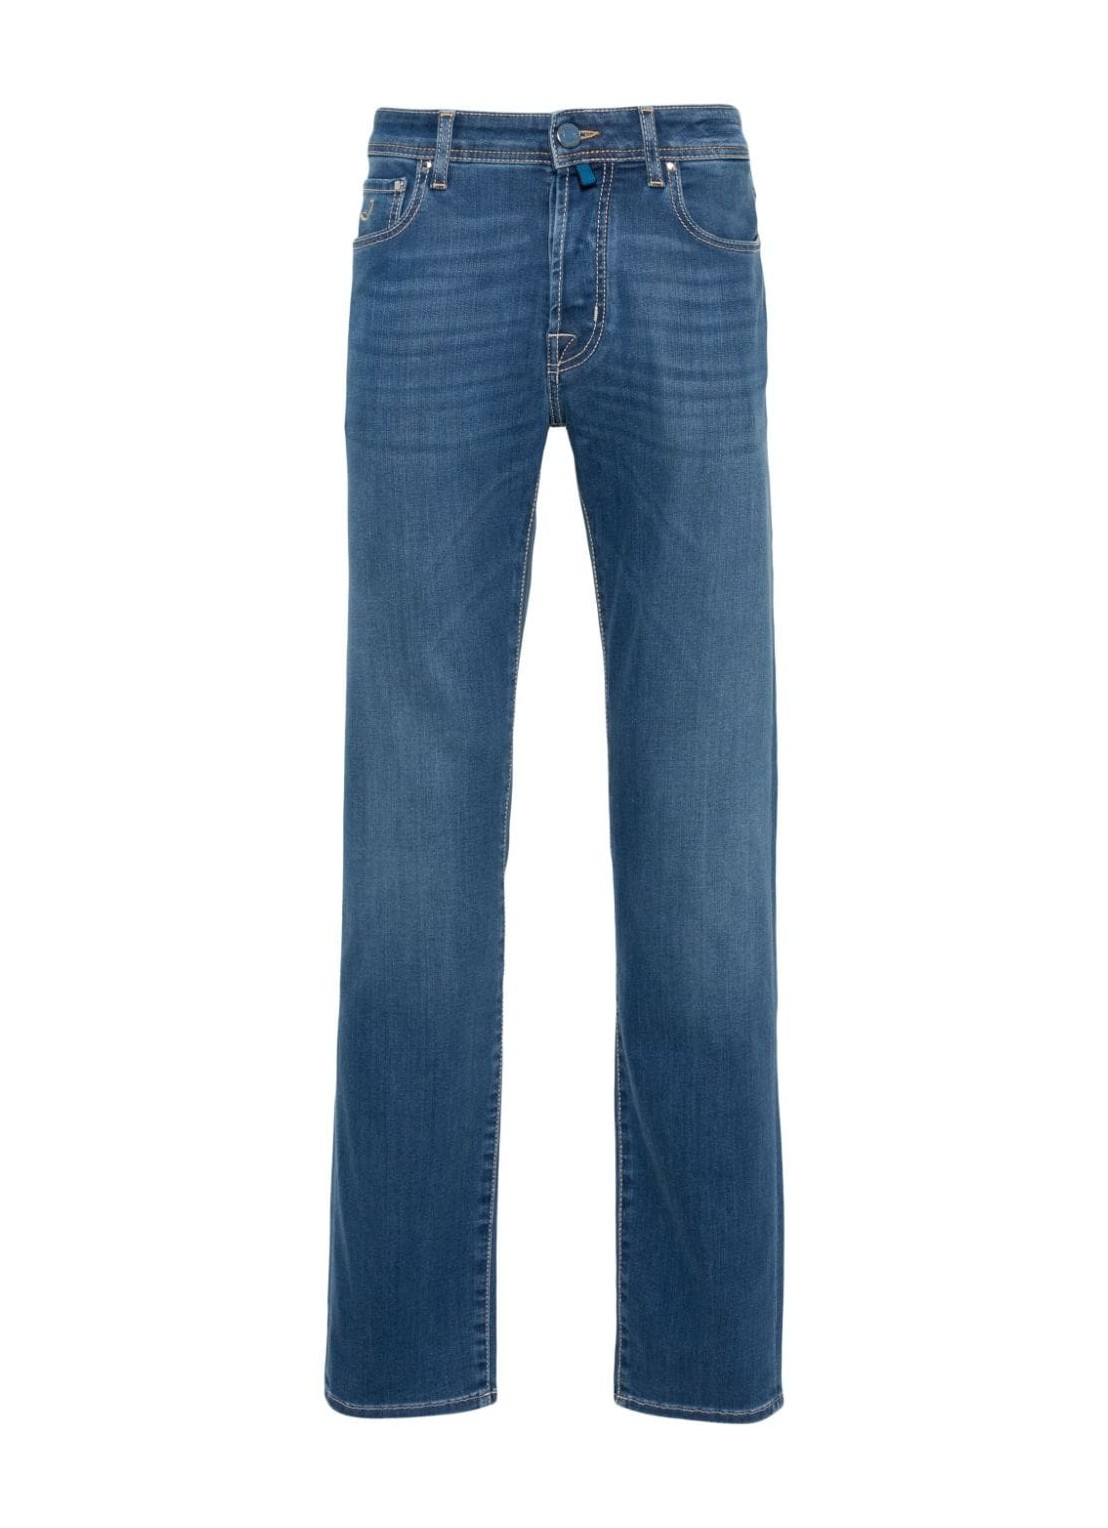 Pantalon jeans jacob cohen denim man pant 5 pkt slim fit bard uqe0434p3582 753d talla Azul
 